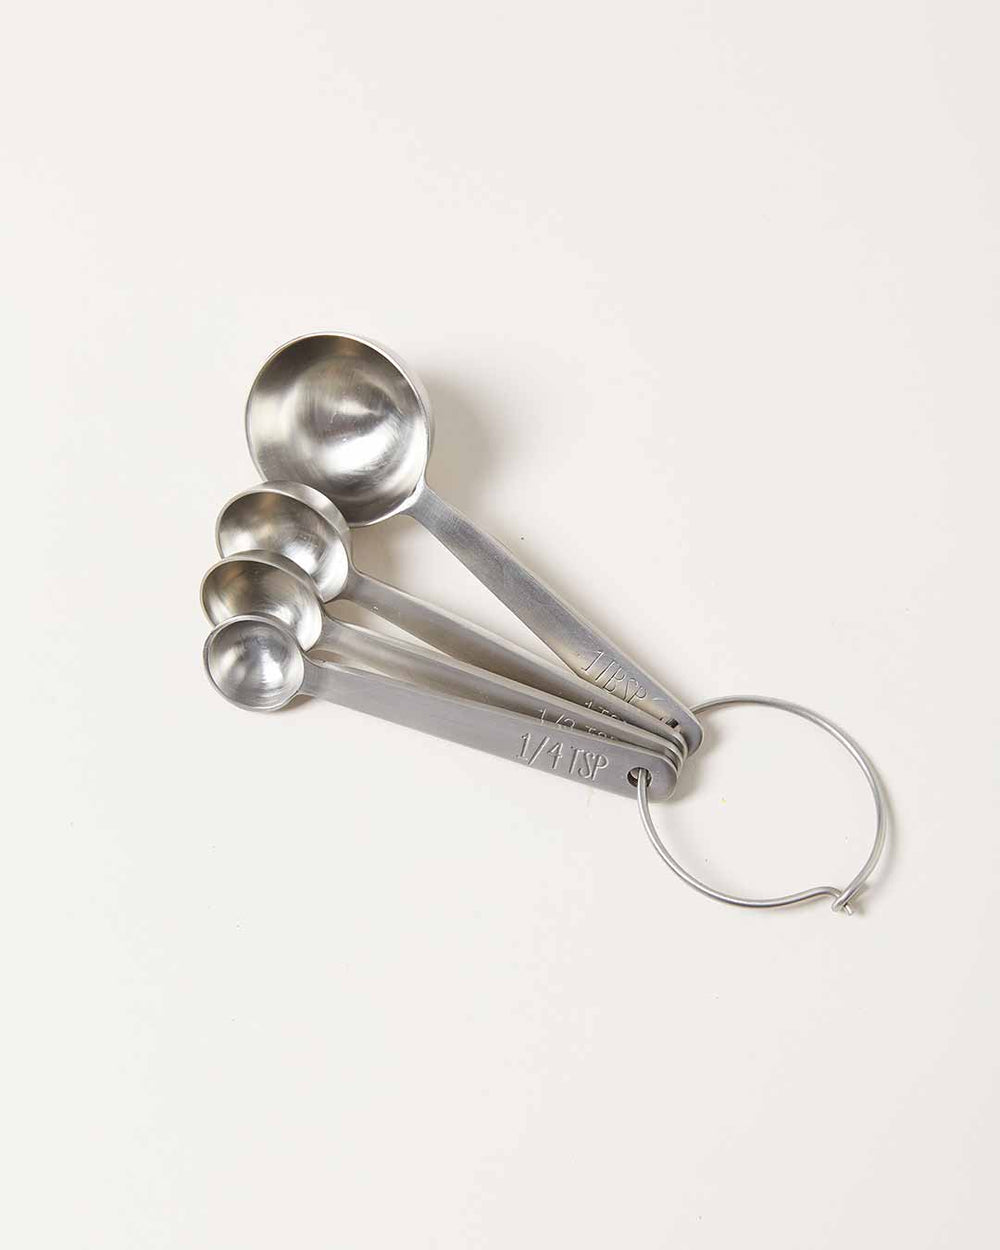 Stowe Measuring Spoons – Farmhouse Pottery